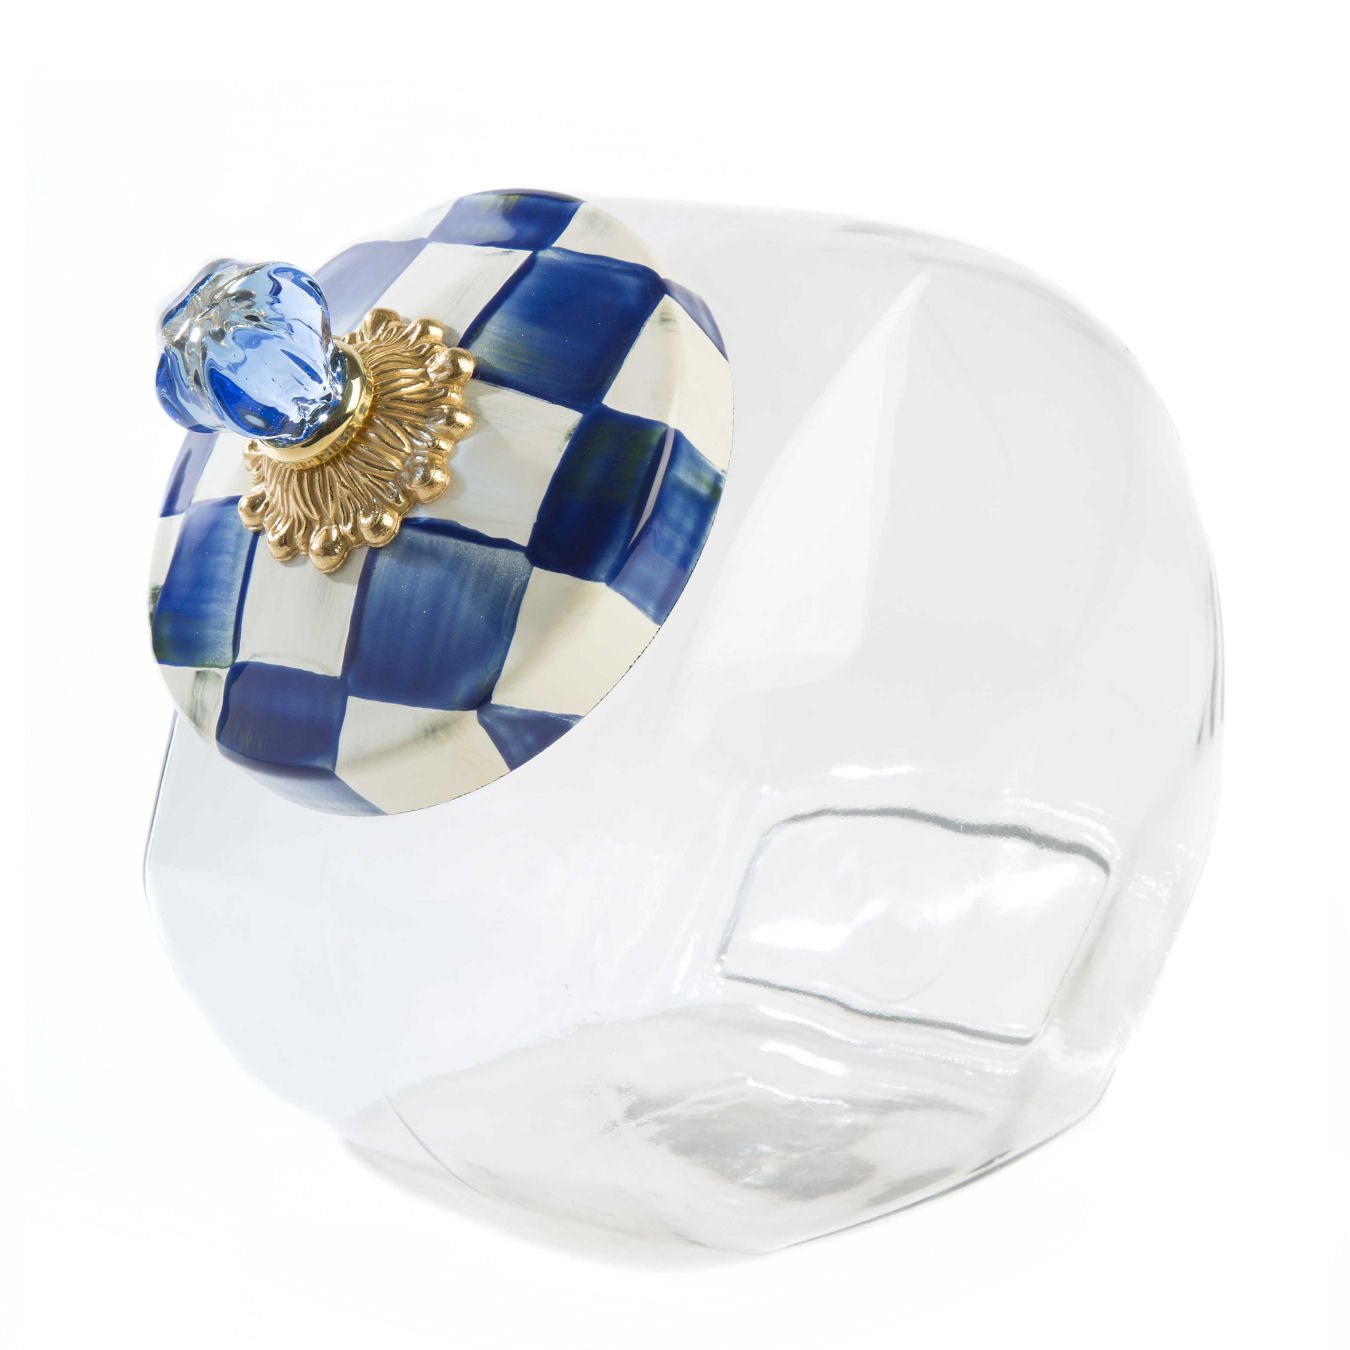 Royal Check Luxury Blue Cookie Jar Enamel Lid by Mackenzie-Childs - |VESIMI Design| Luxury and Rustic bathrooms online